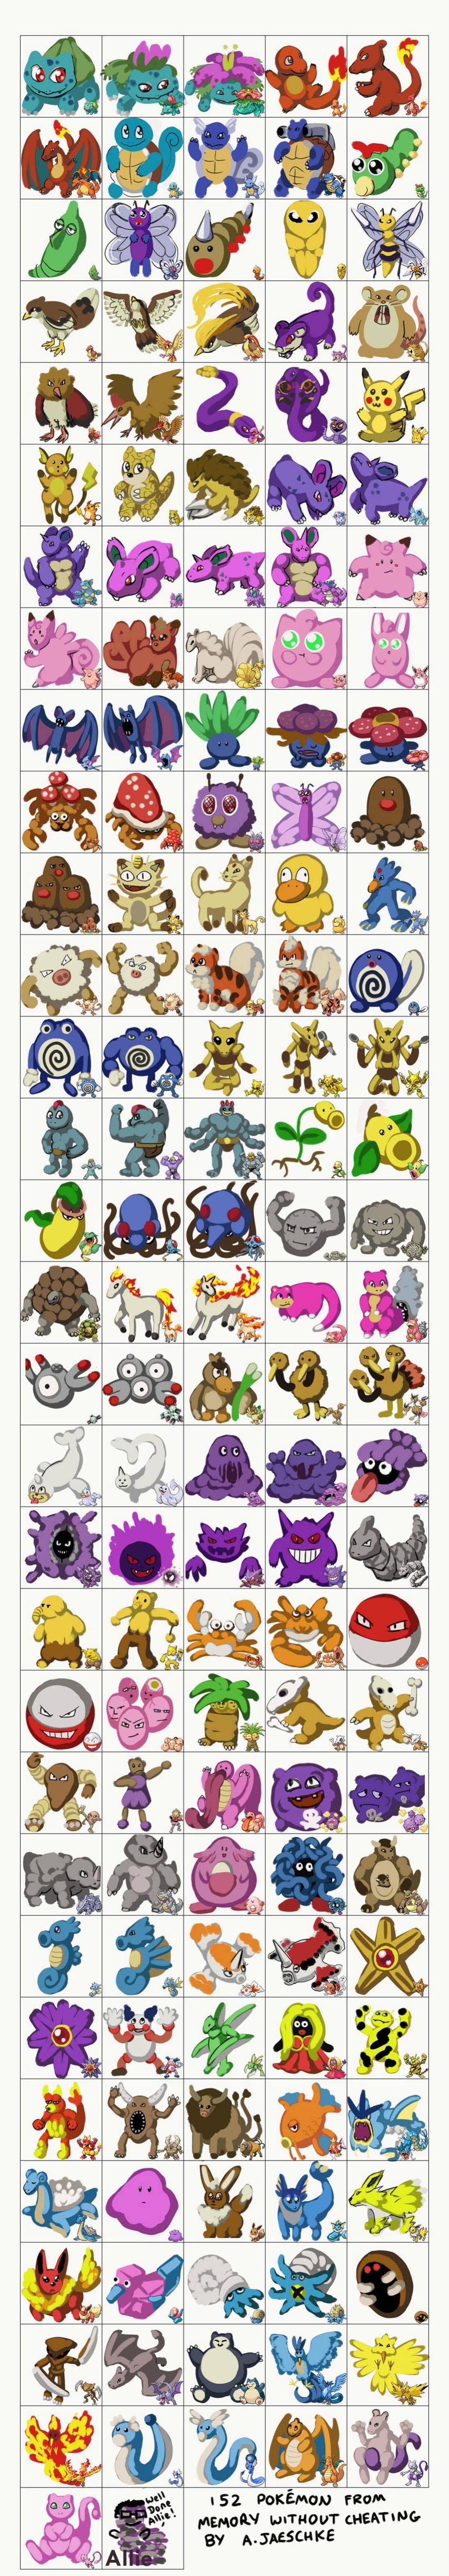 151 Pokemon from Memory by raposavyk on DeviantArt